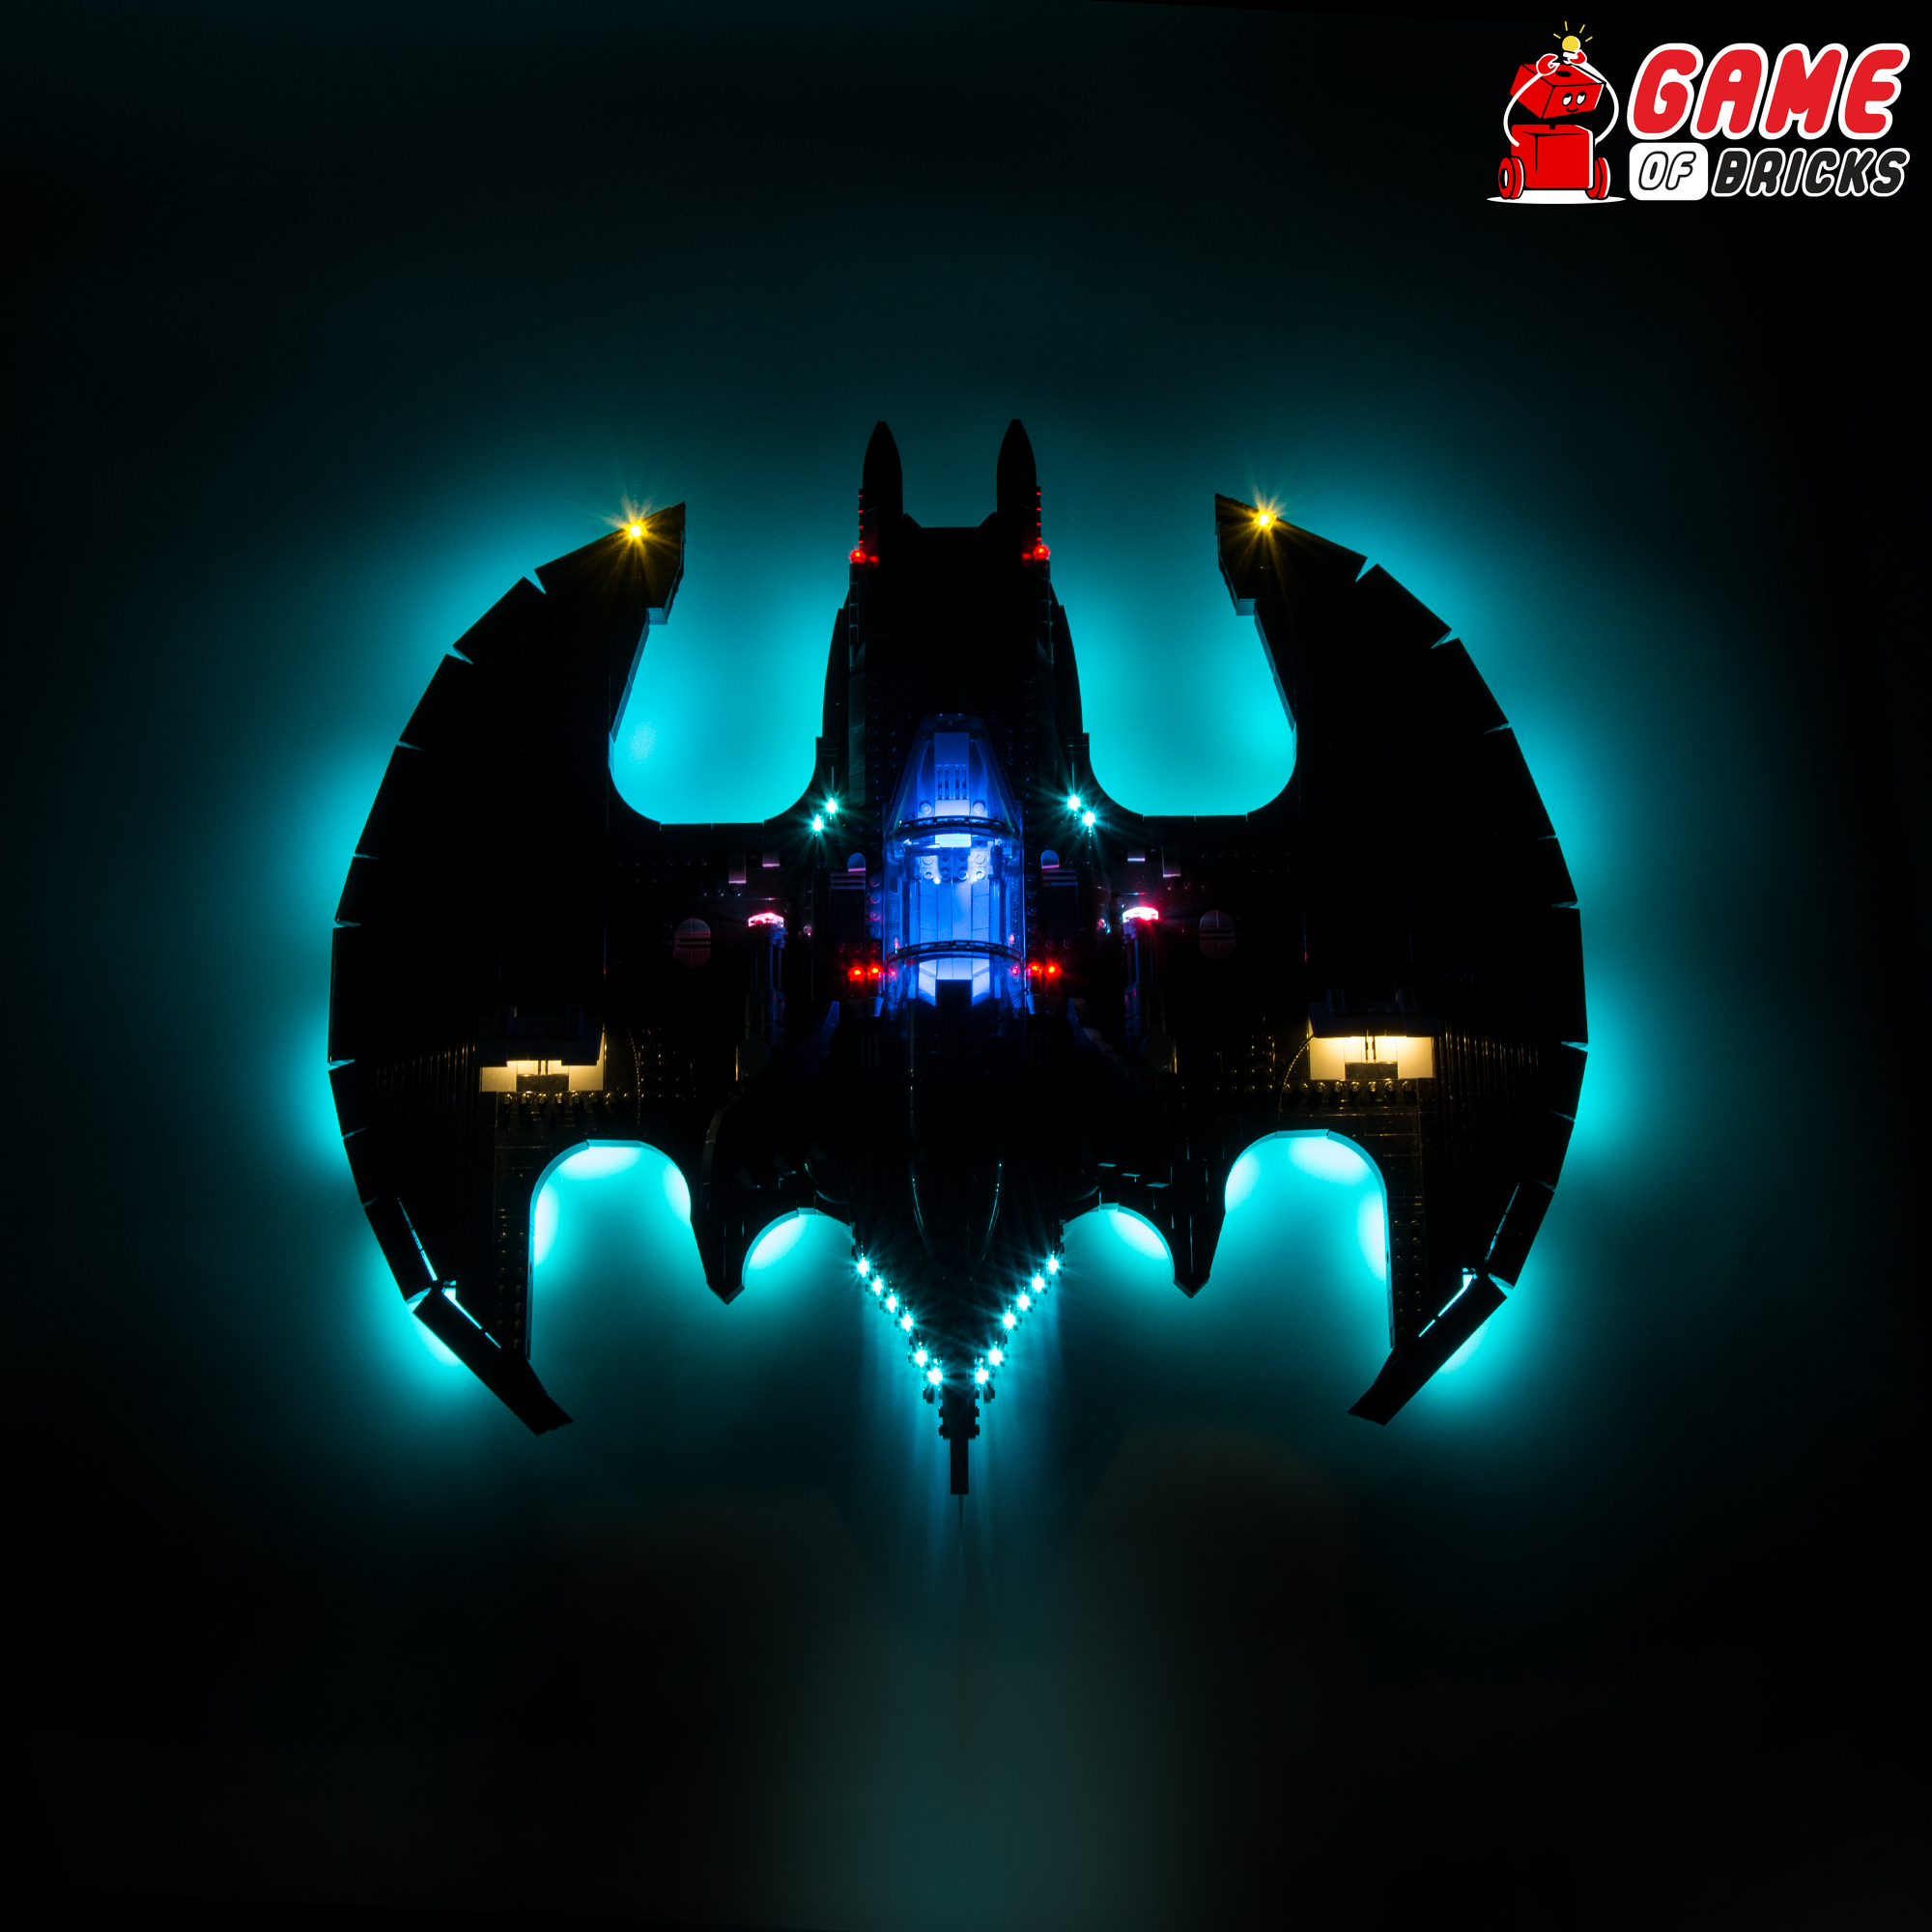 Lego releases new Batman 1989 Batwing set on Batman Day - CNET